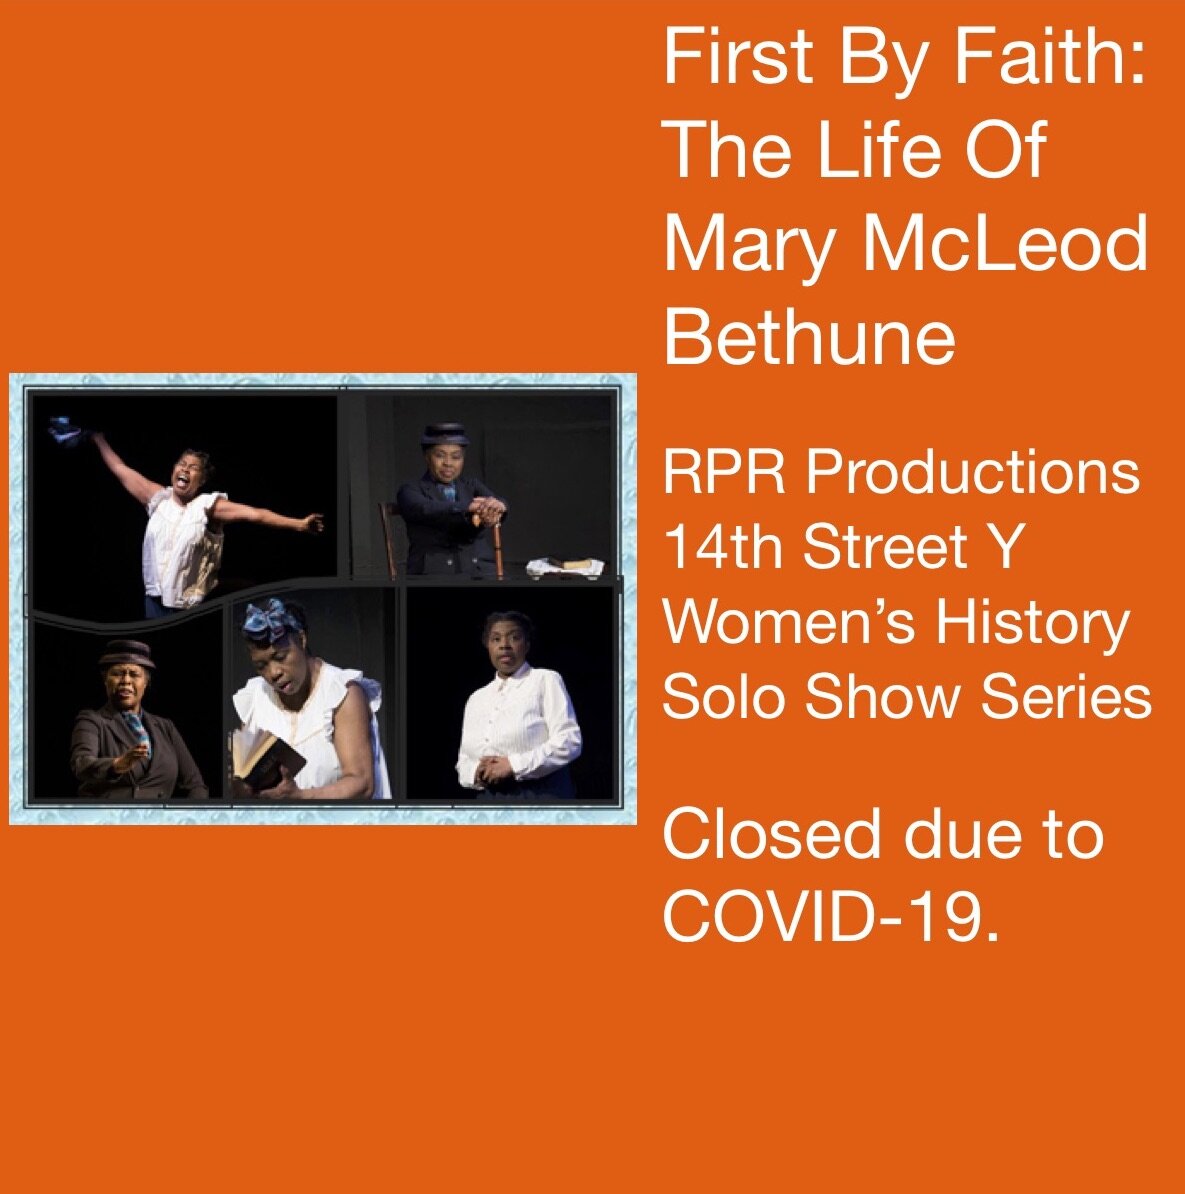 First by Faith: The Life of Mary McLeod Bethune